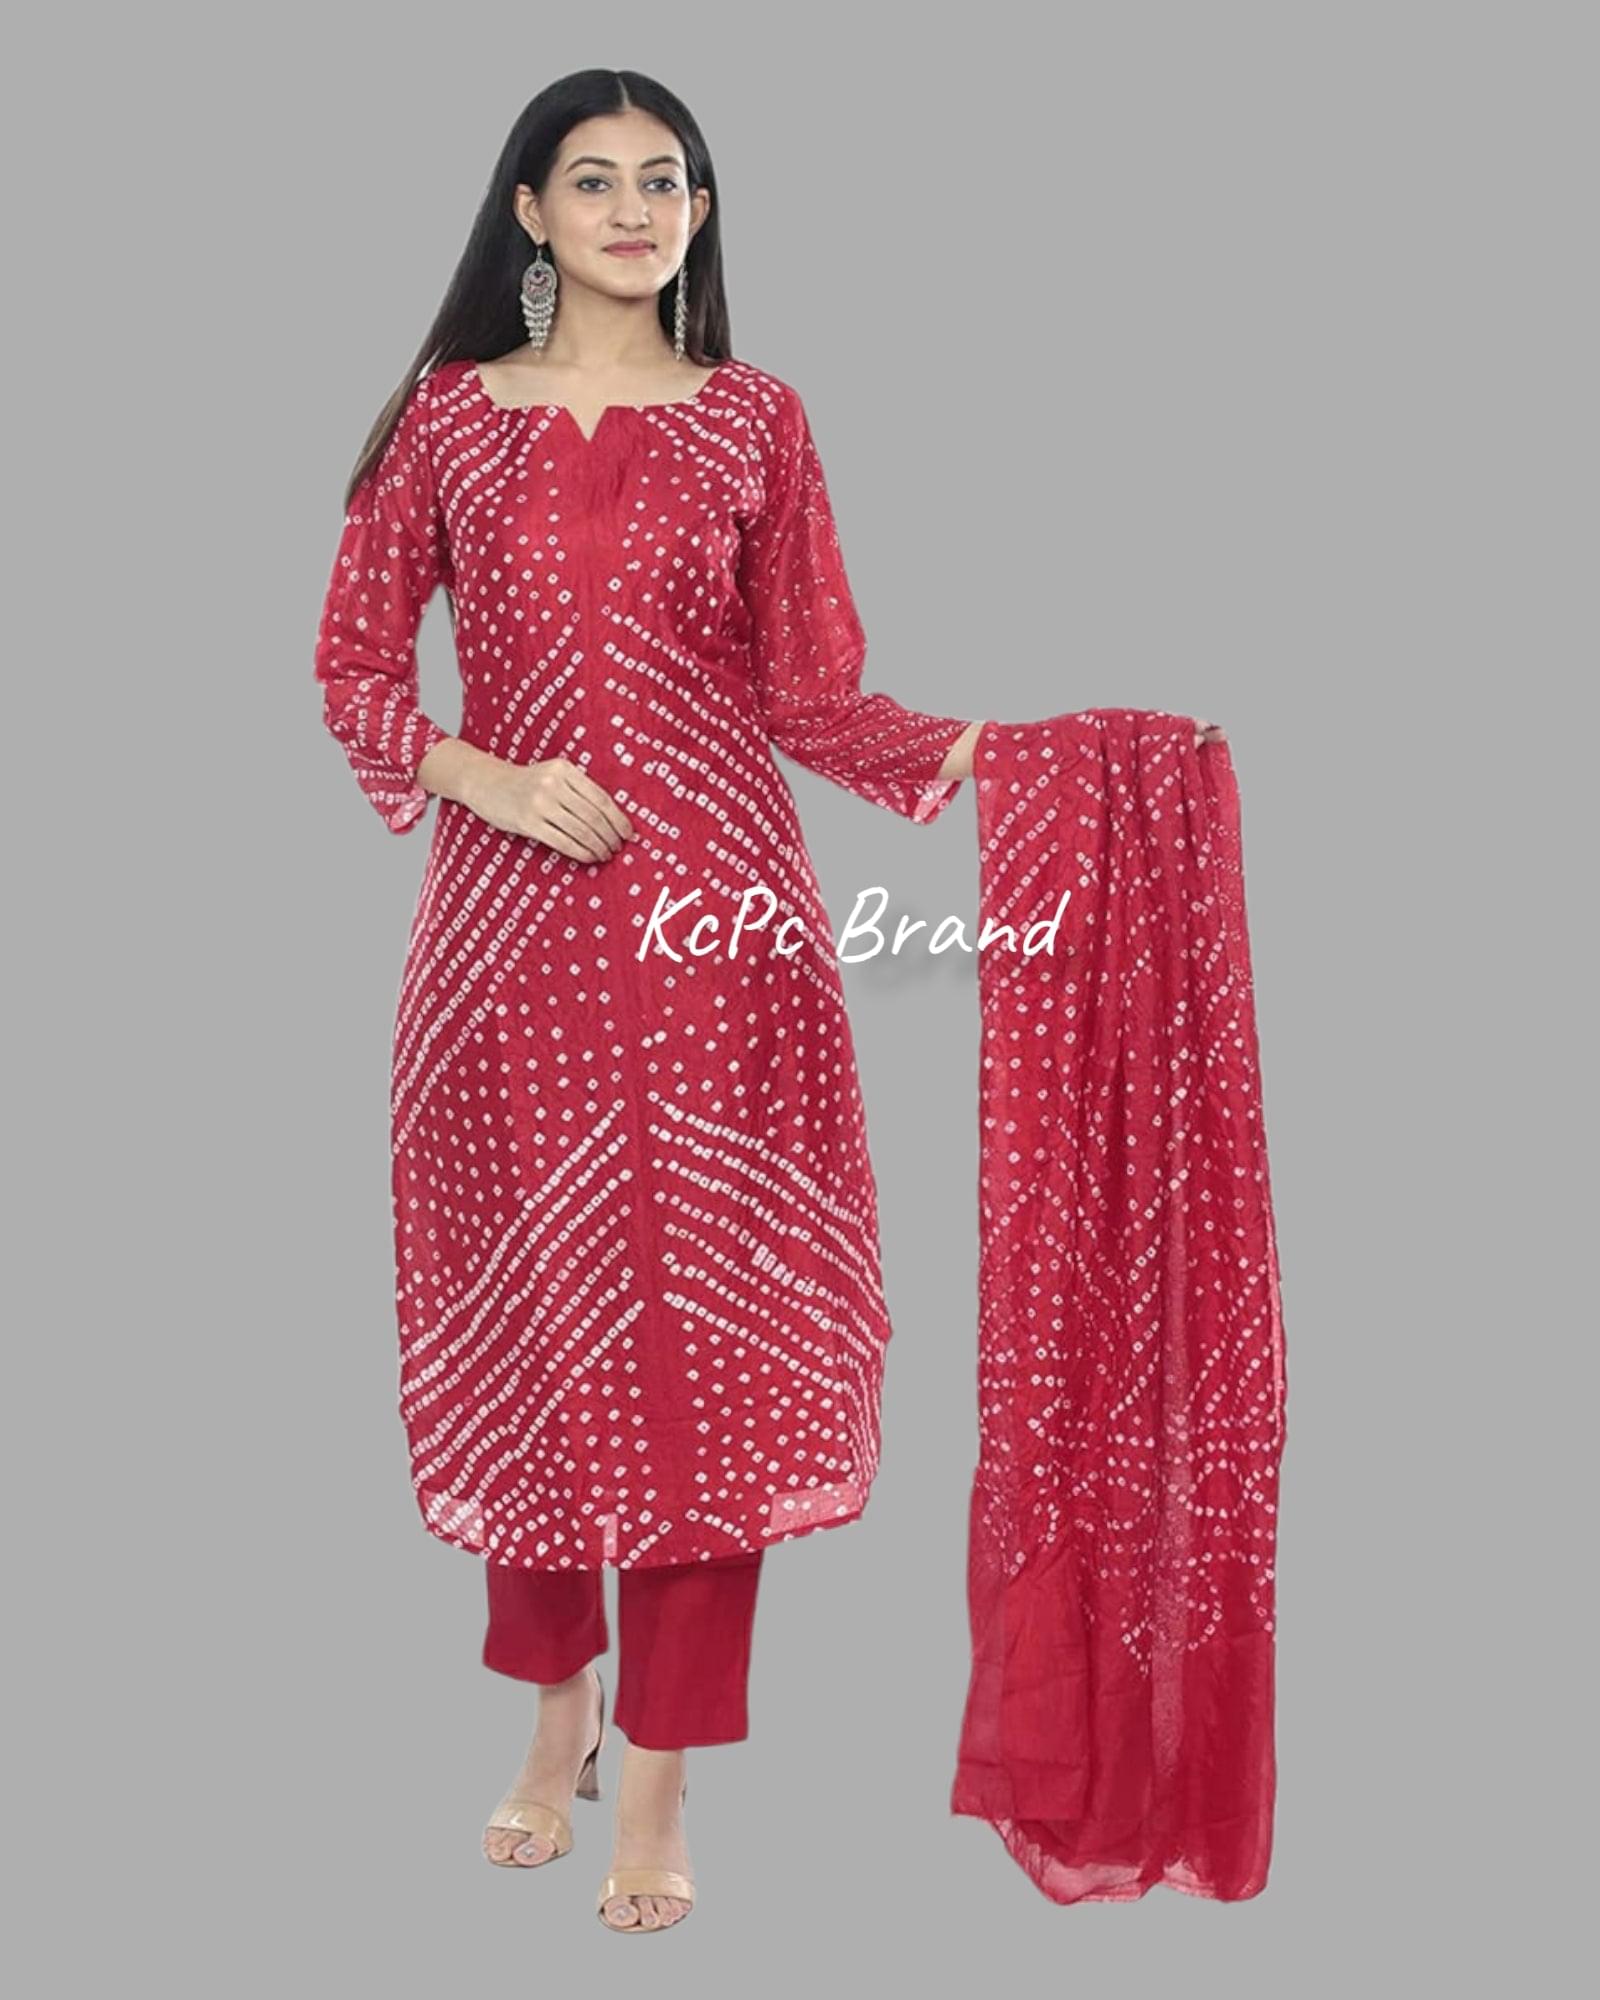 Bandhani Dress Manufacturers and suppliers in Surat, Gujarat, India -  Latest Bandhani dress